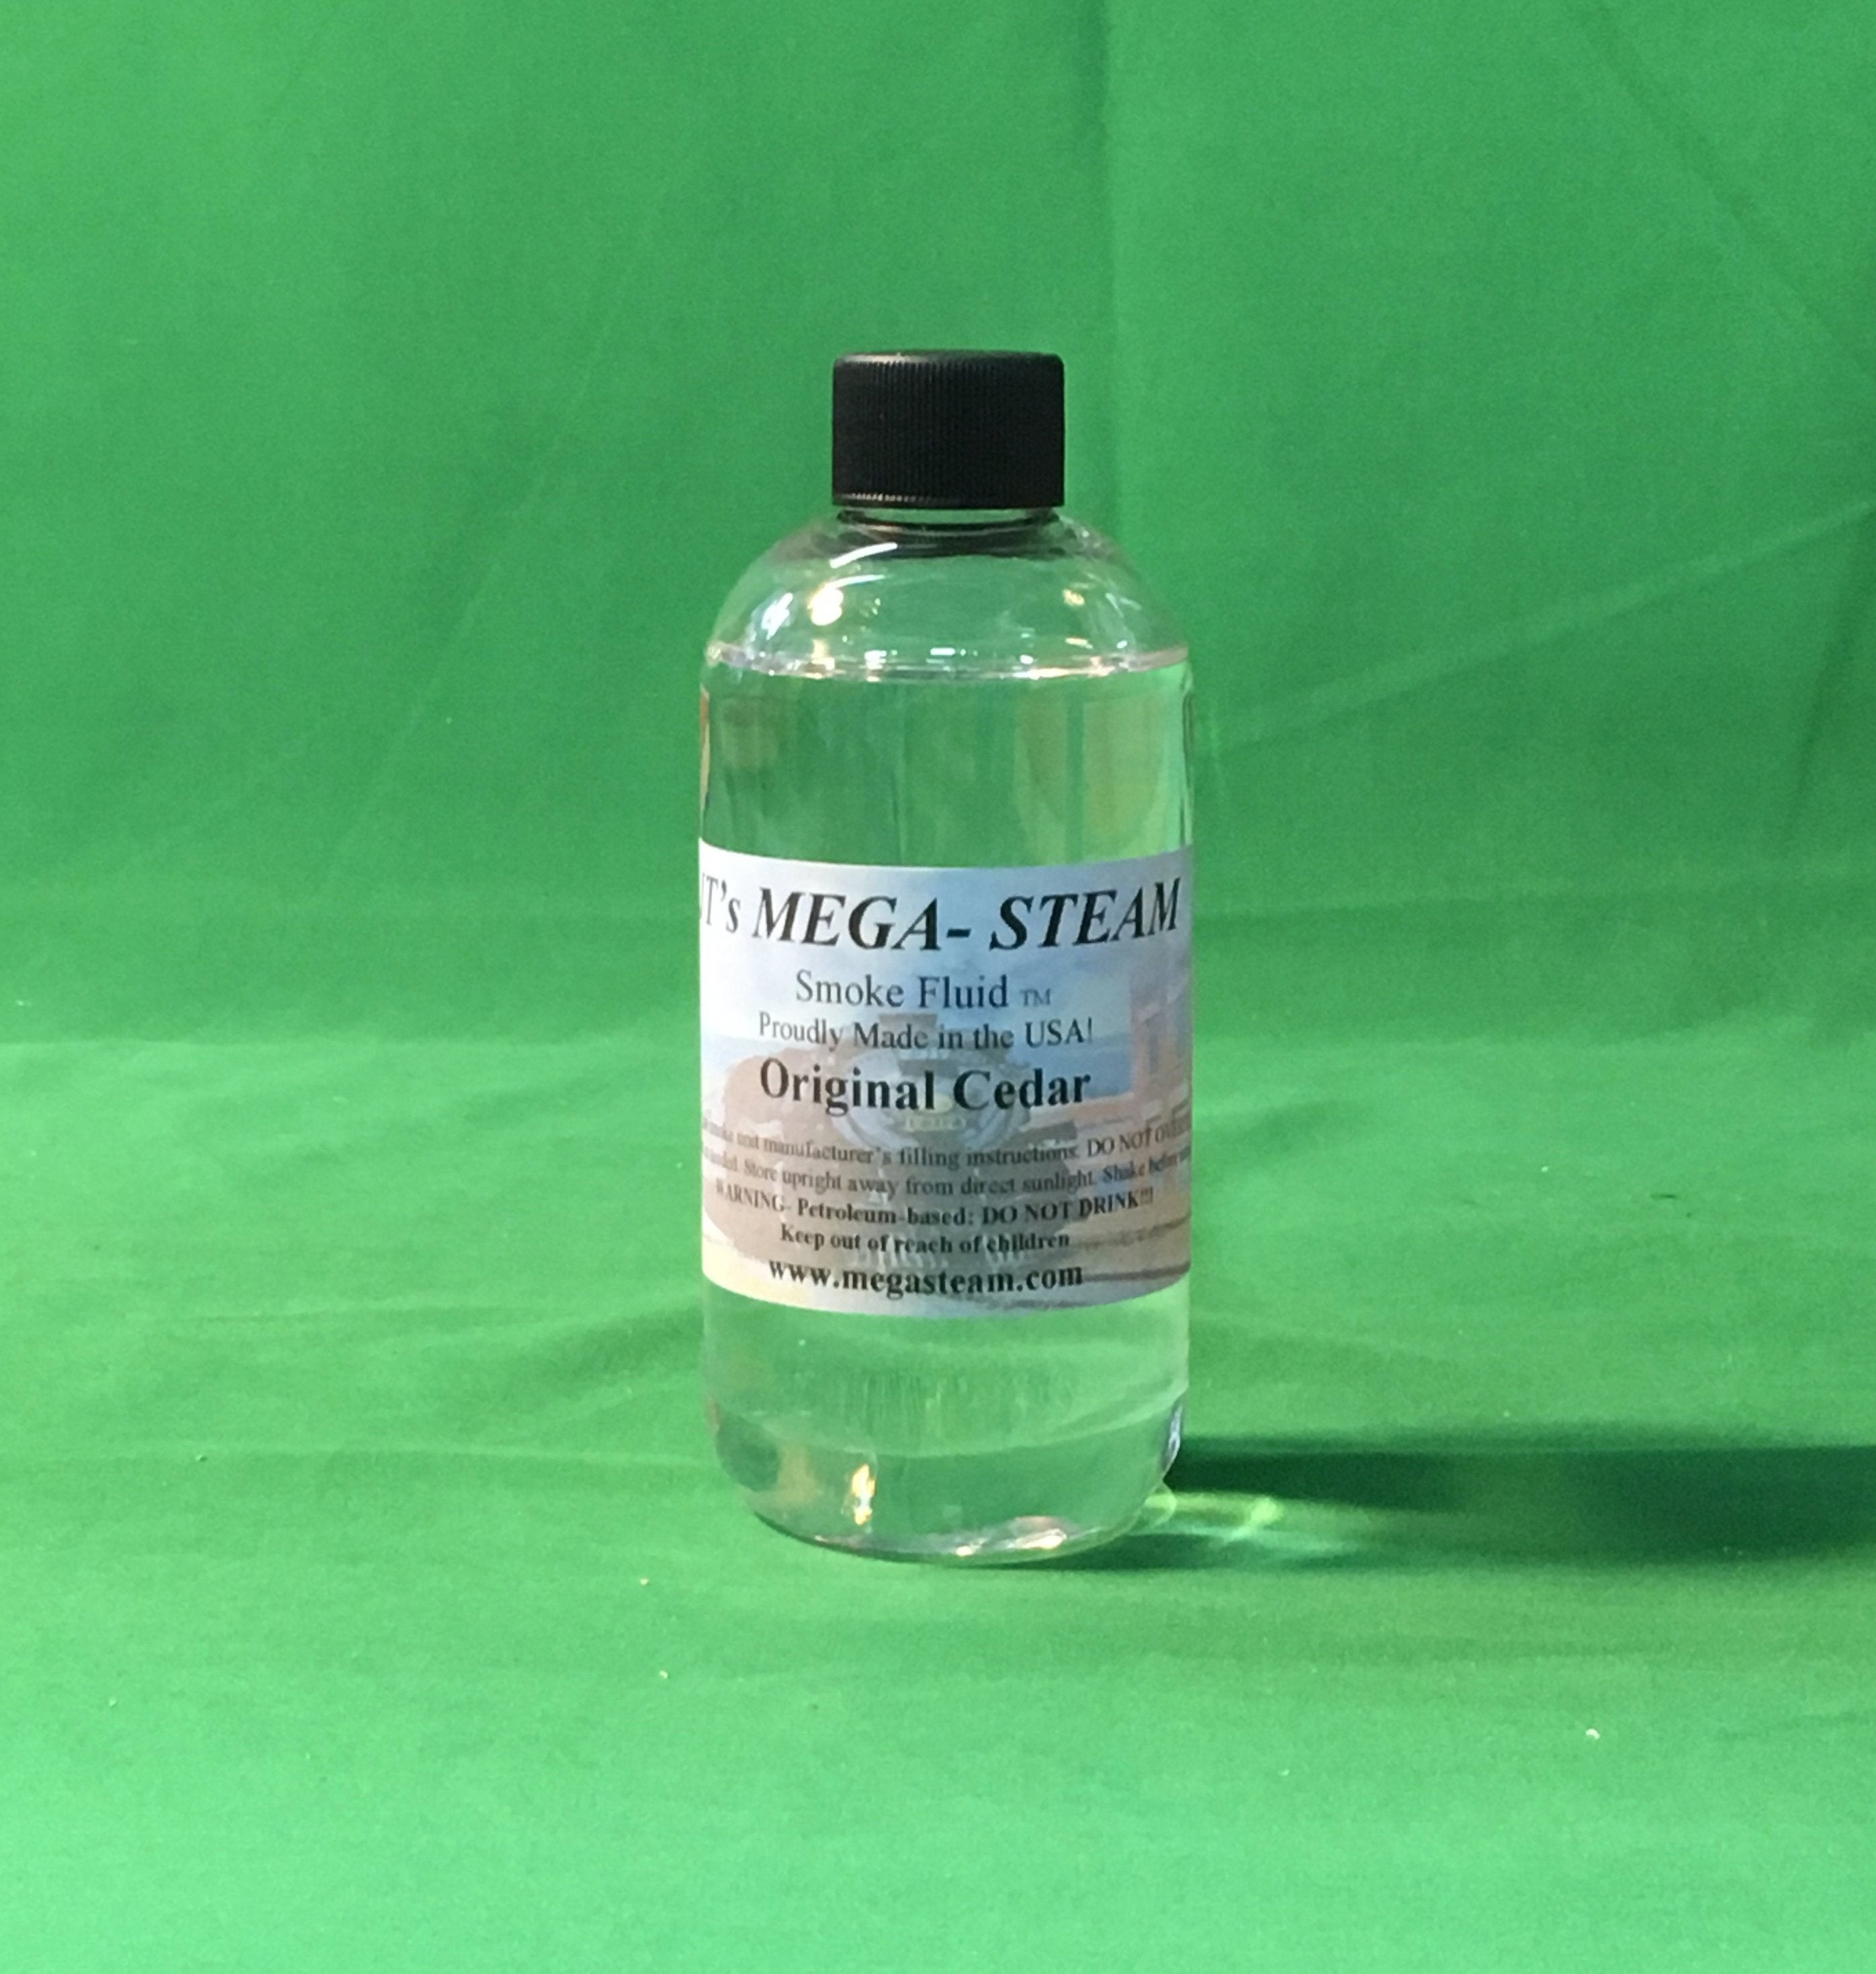 JT's Mega-Steam Smoke Fluid - Classic Scents - 8 Oz Refill Bottle